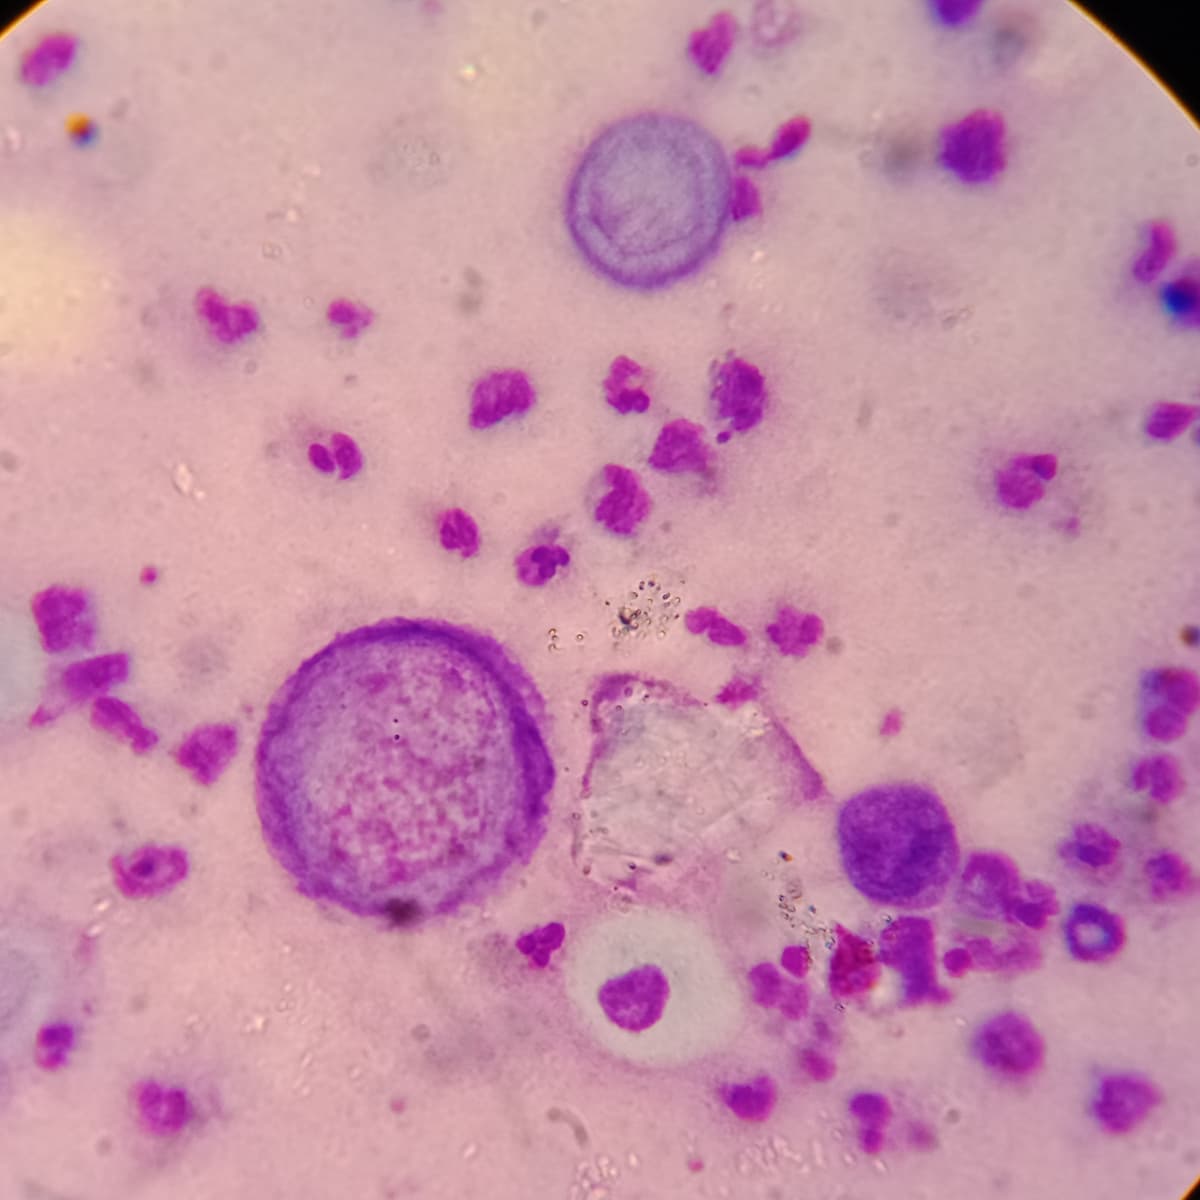 Herpes Simplex under microscope